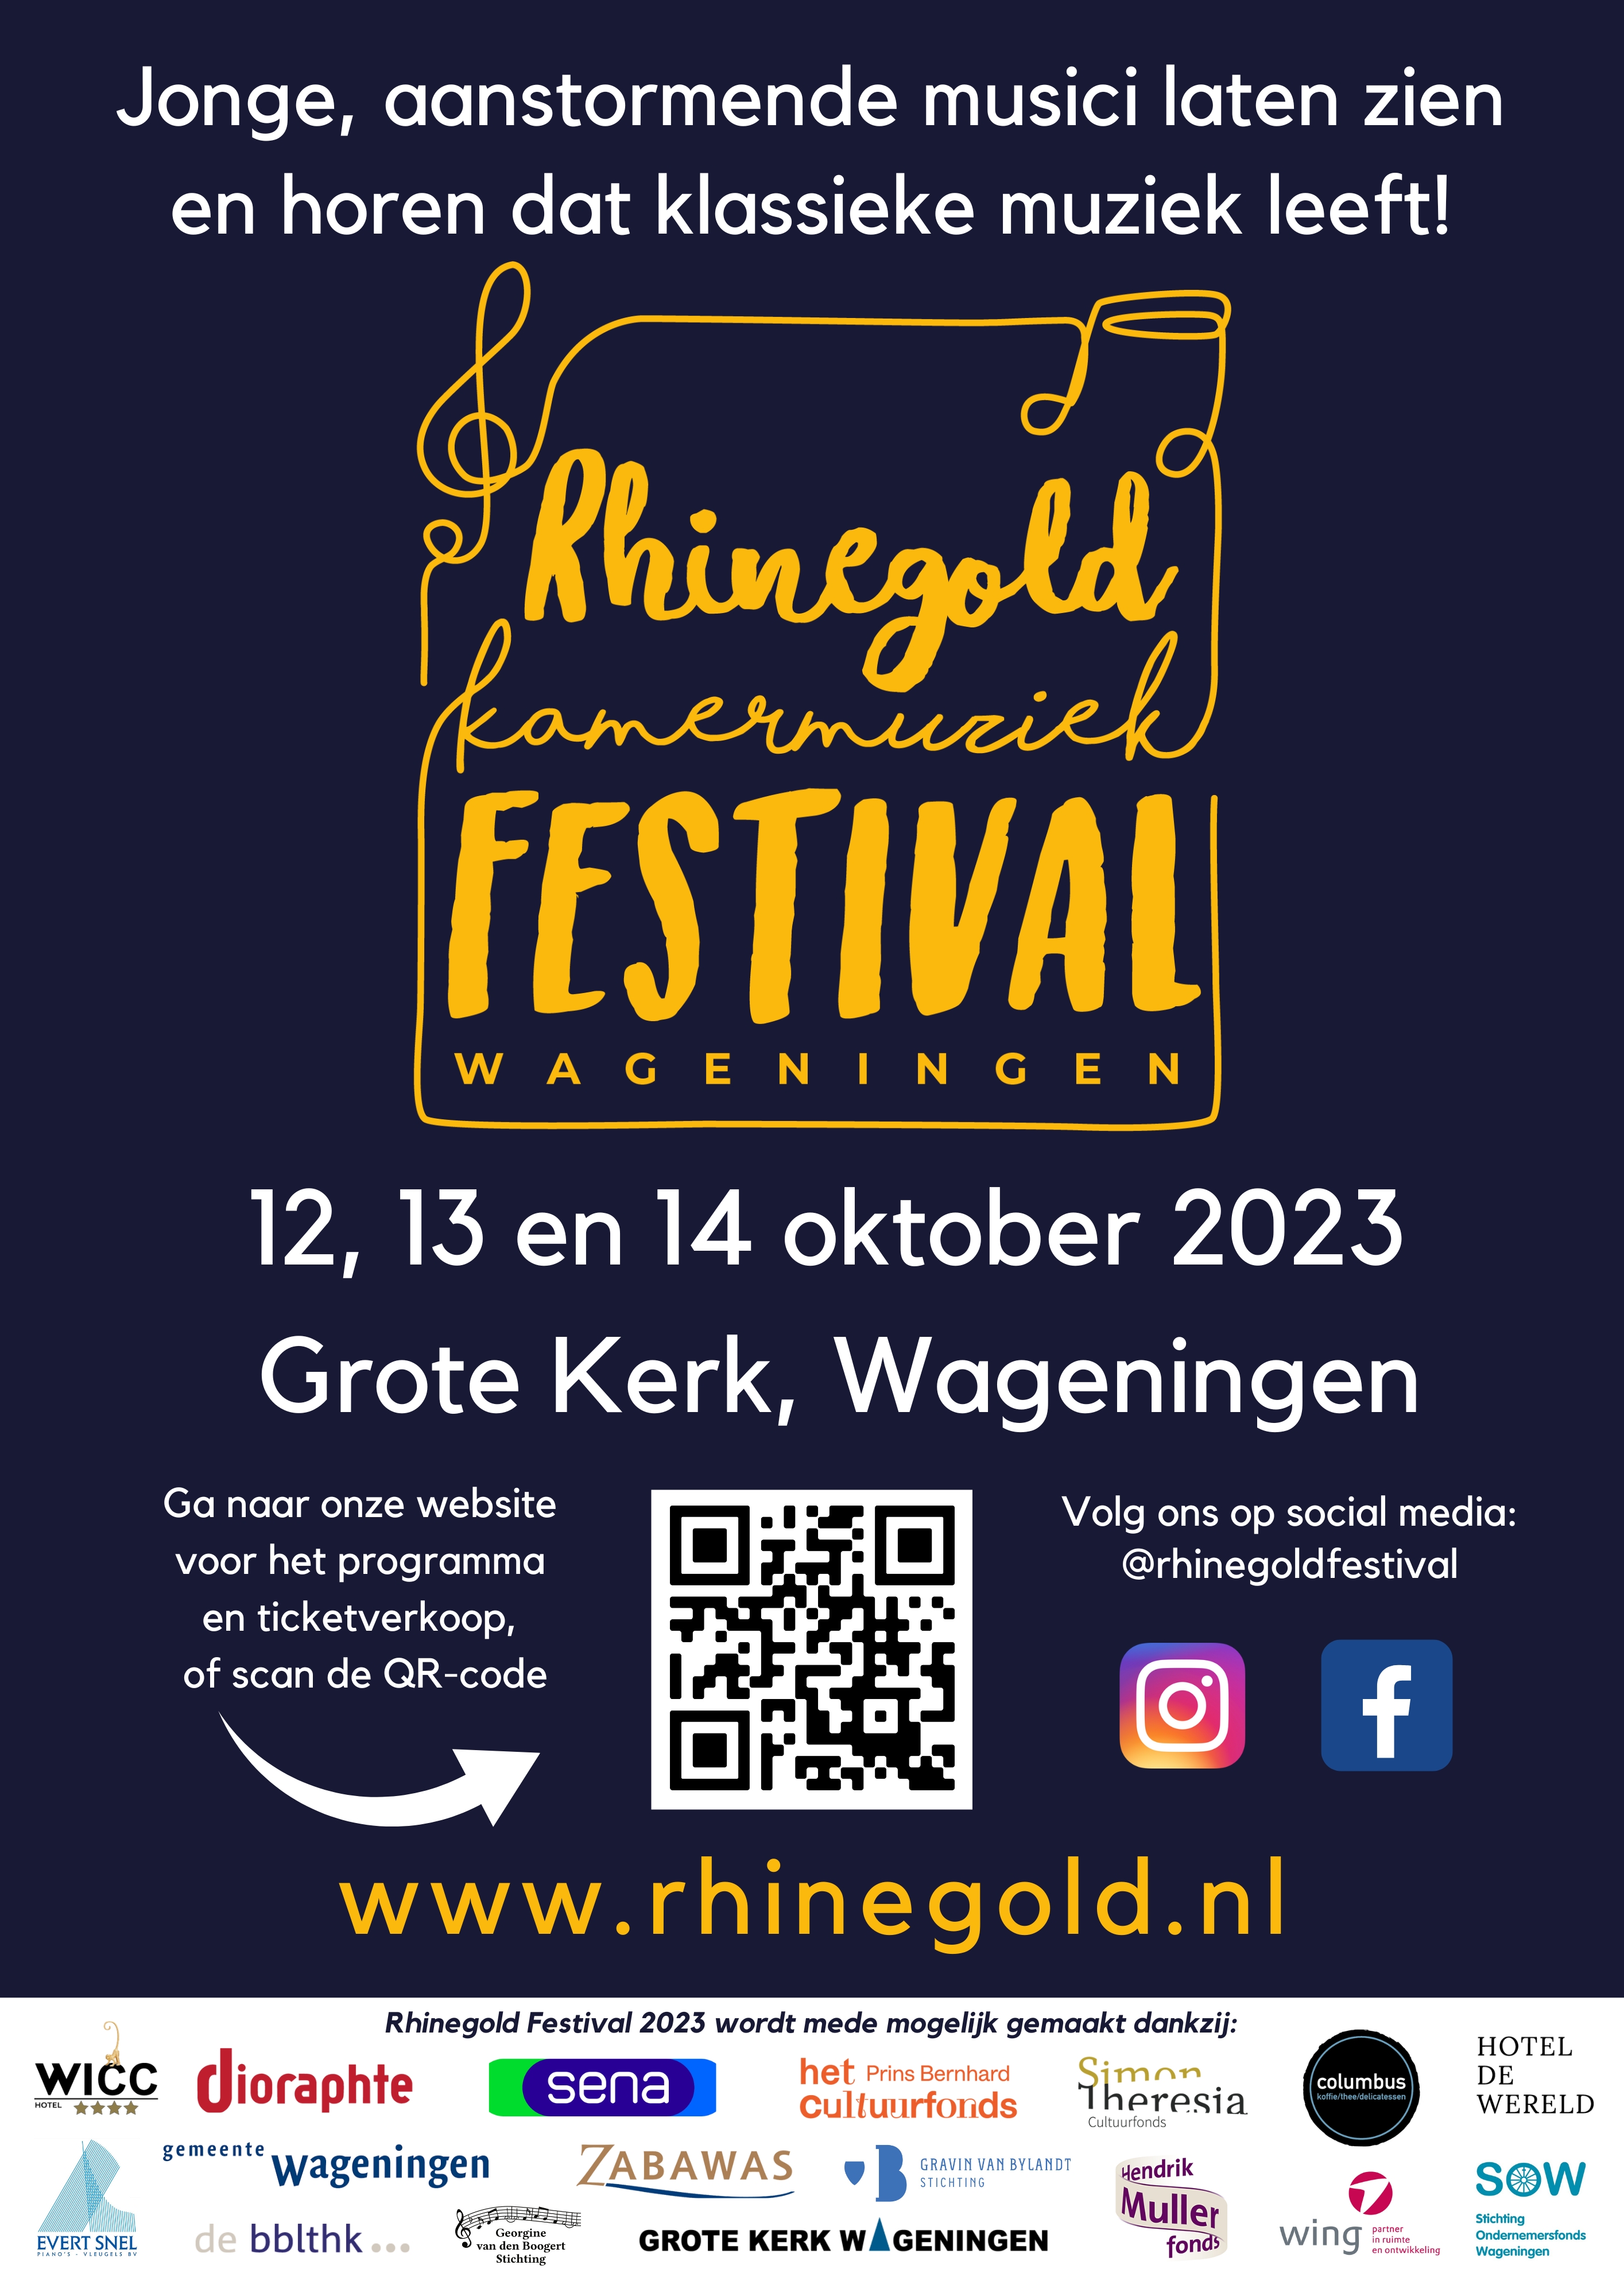 Kaartverkoop voor Rhinegold Festival 2023 is gestart!